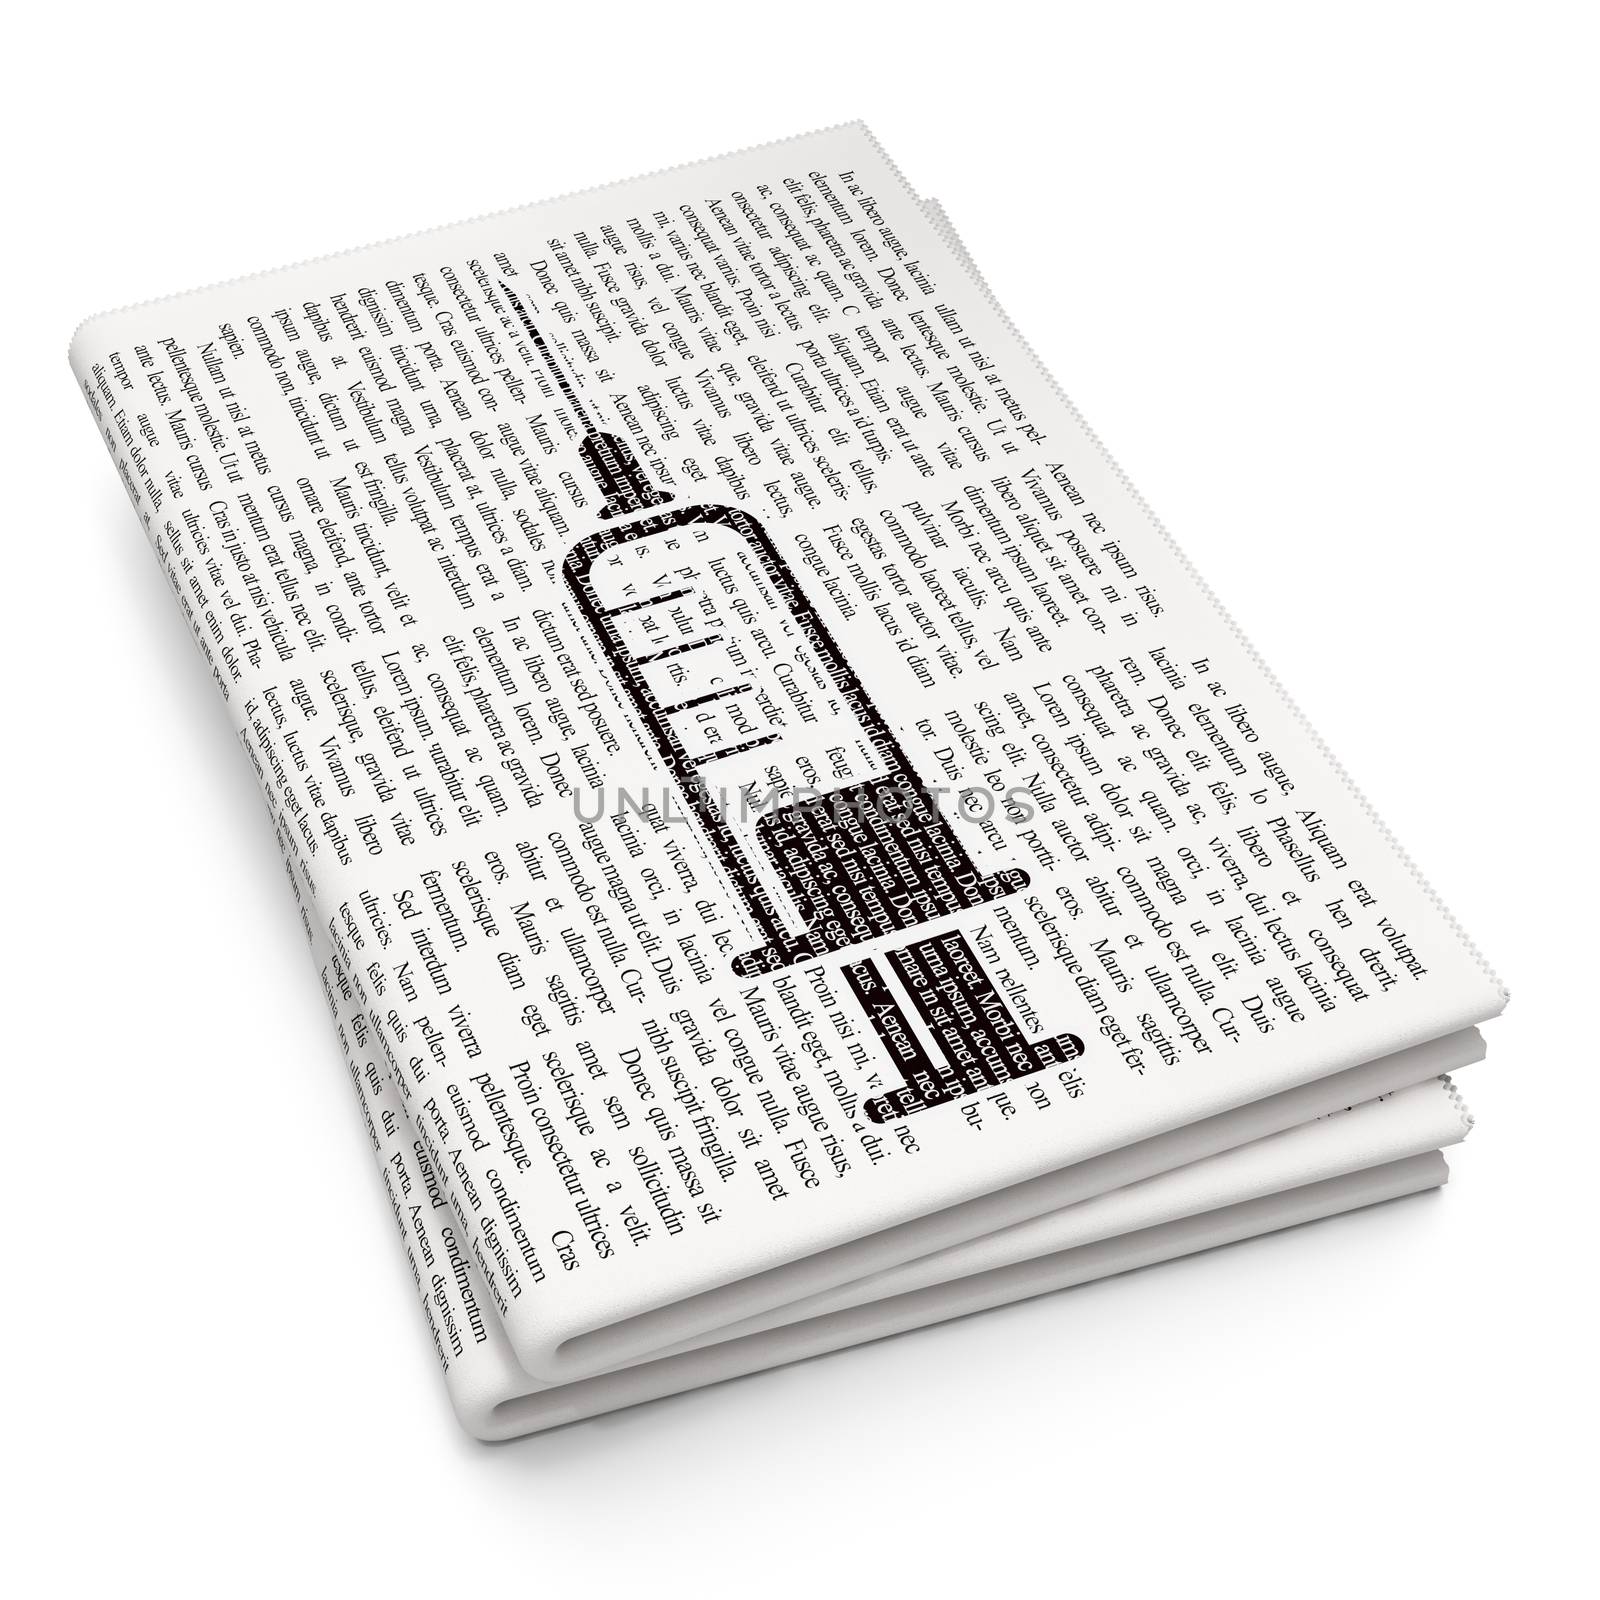 Medicine concept: Pixelated black Syringe icon on Newspaper background